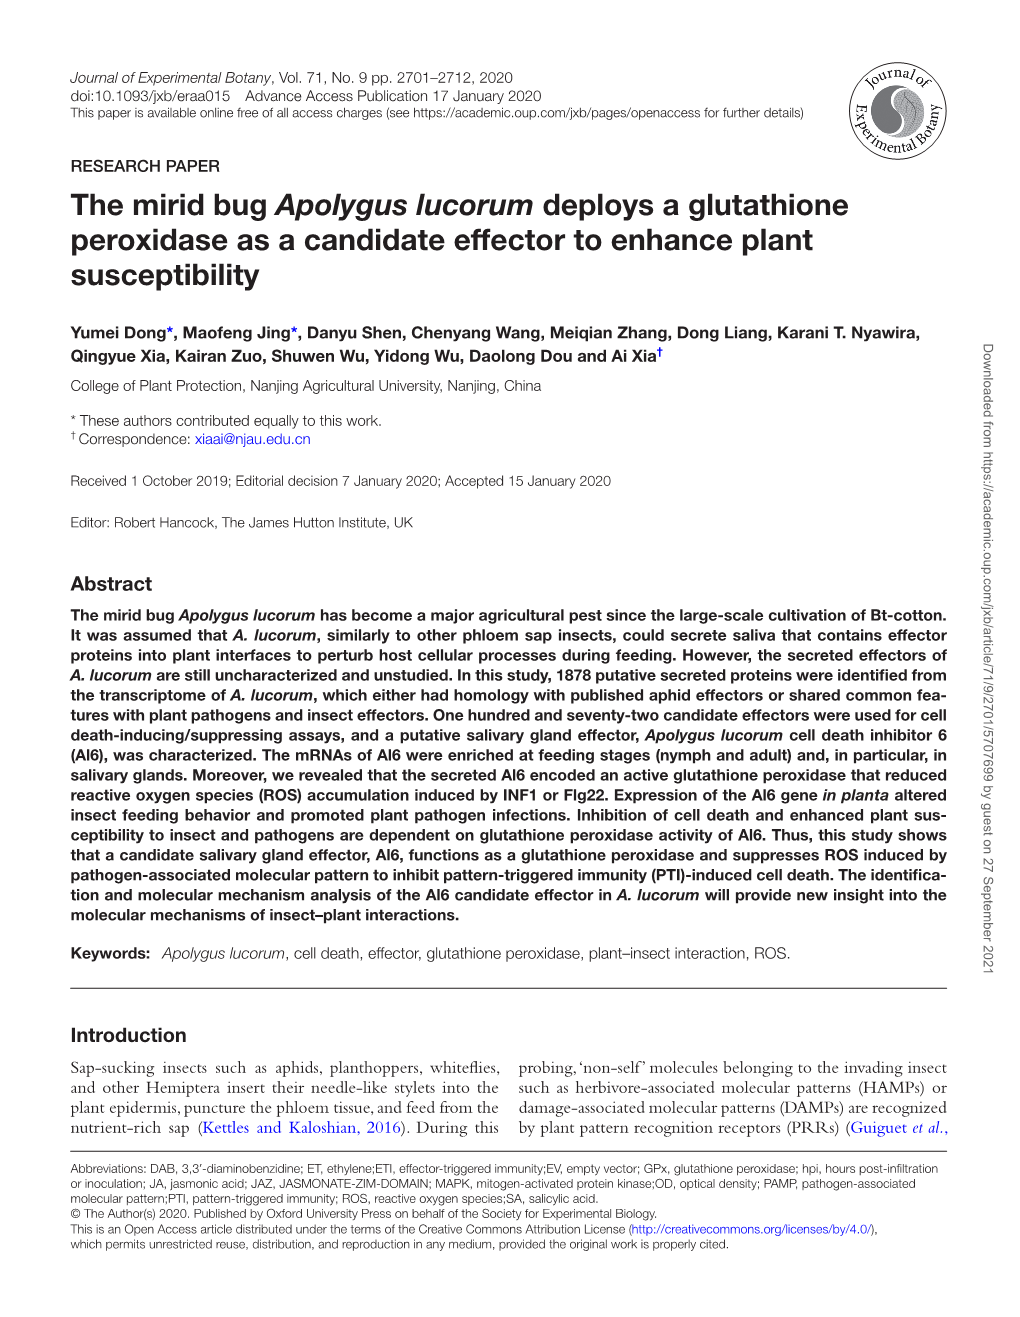 The Mirid Bug Apolygus Lucorum Deploys a Glutathione Peroxidase As a Candidate Effector to Enhance Plant Susceptibility